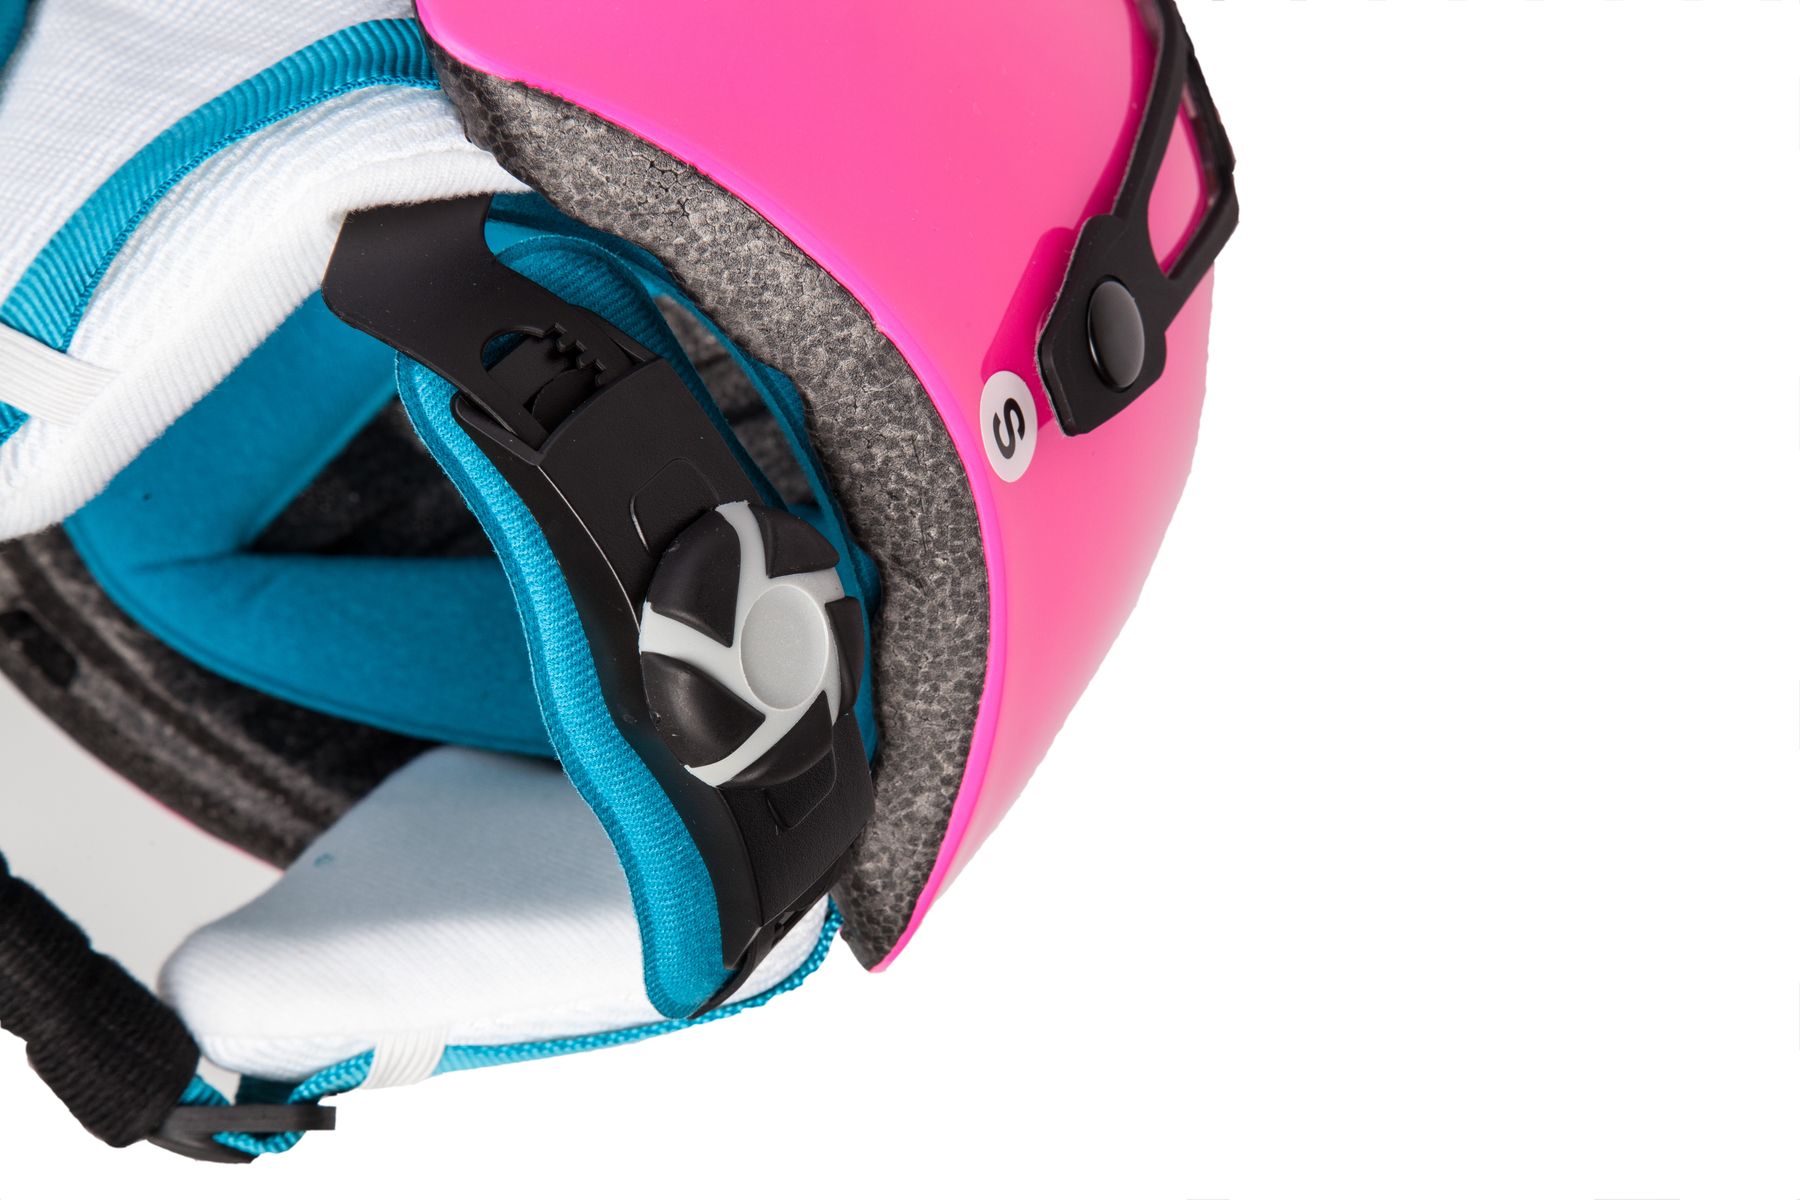 SIGNAL ski helmet, pink